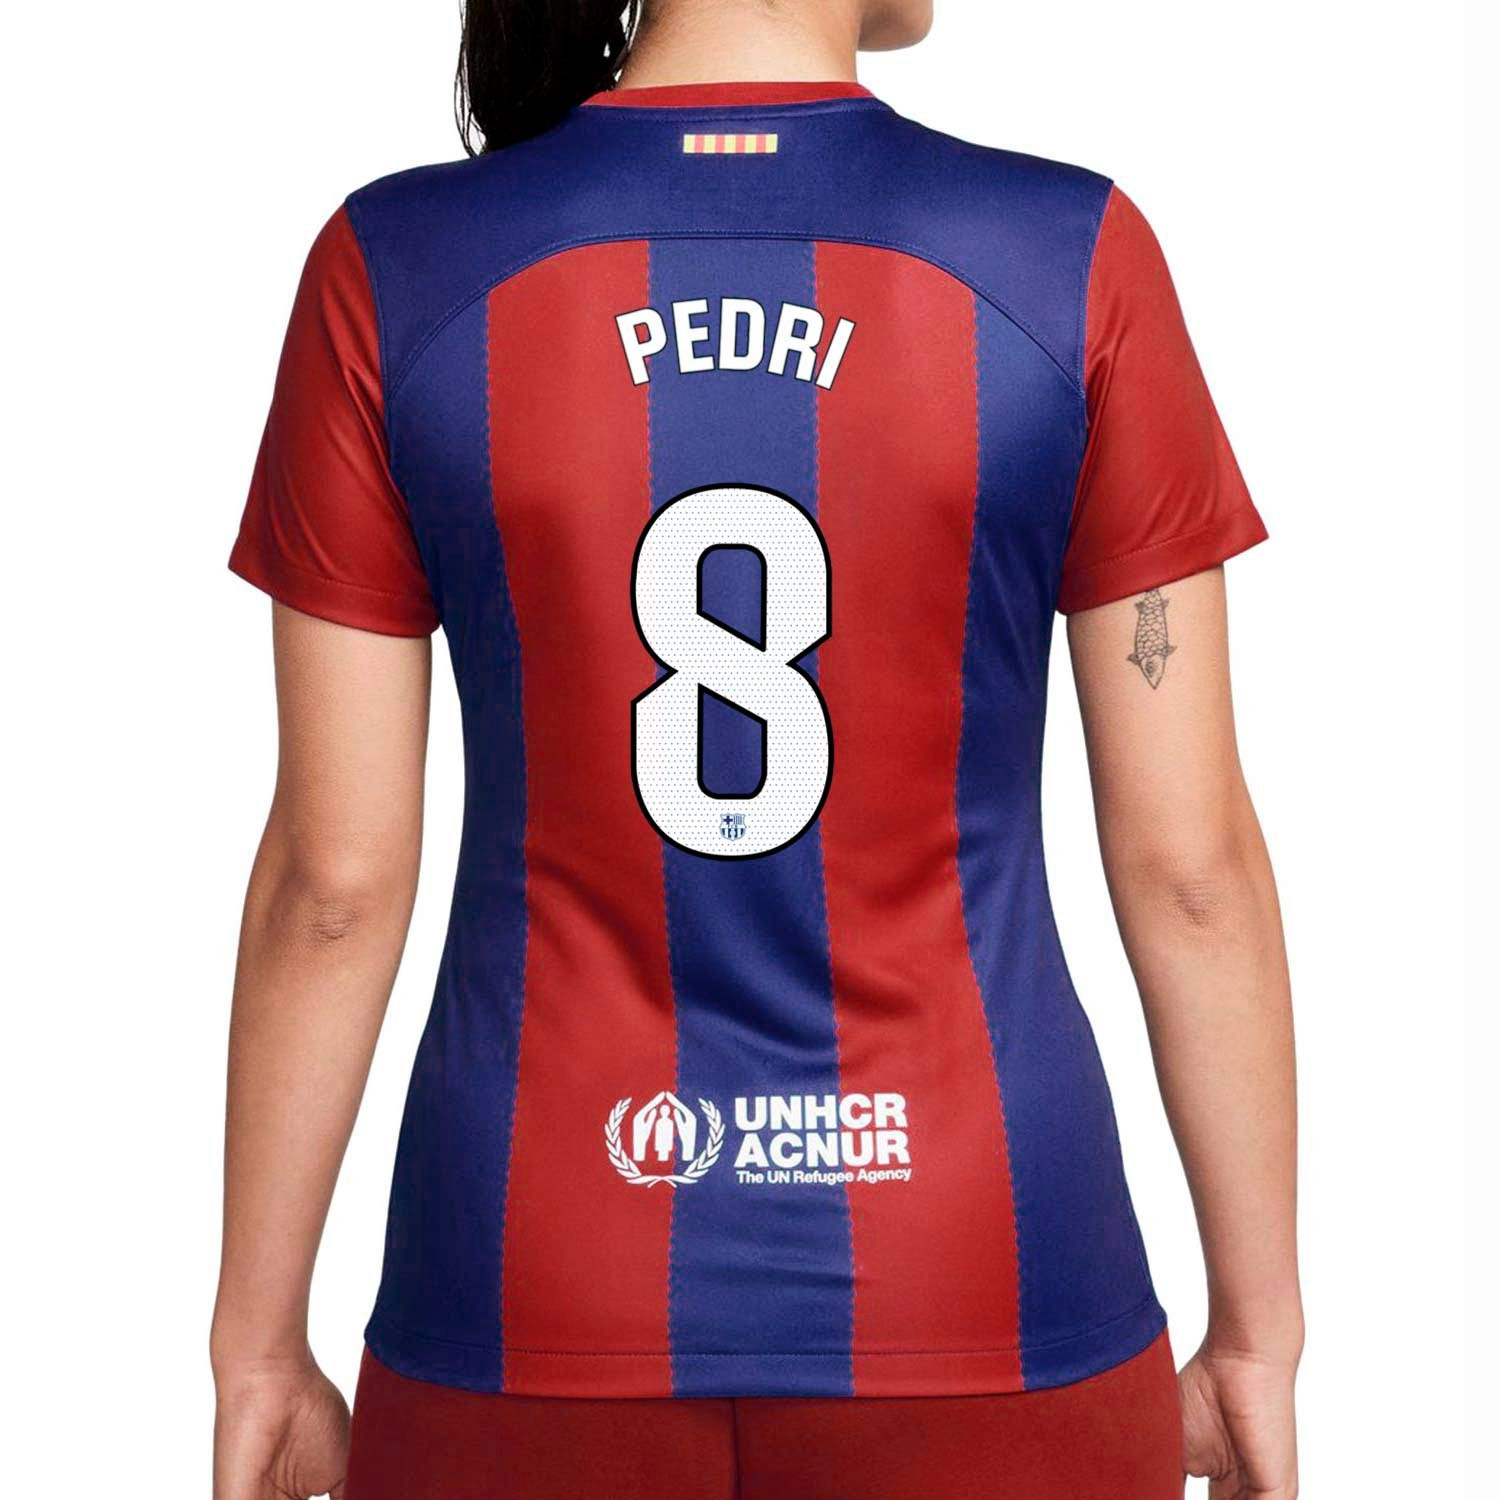 Camiseta Nike Barcelona mujer Pedri 2023 2024 DF |